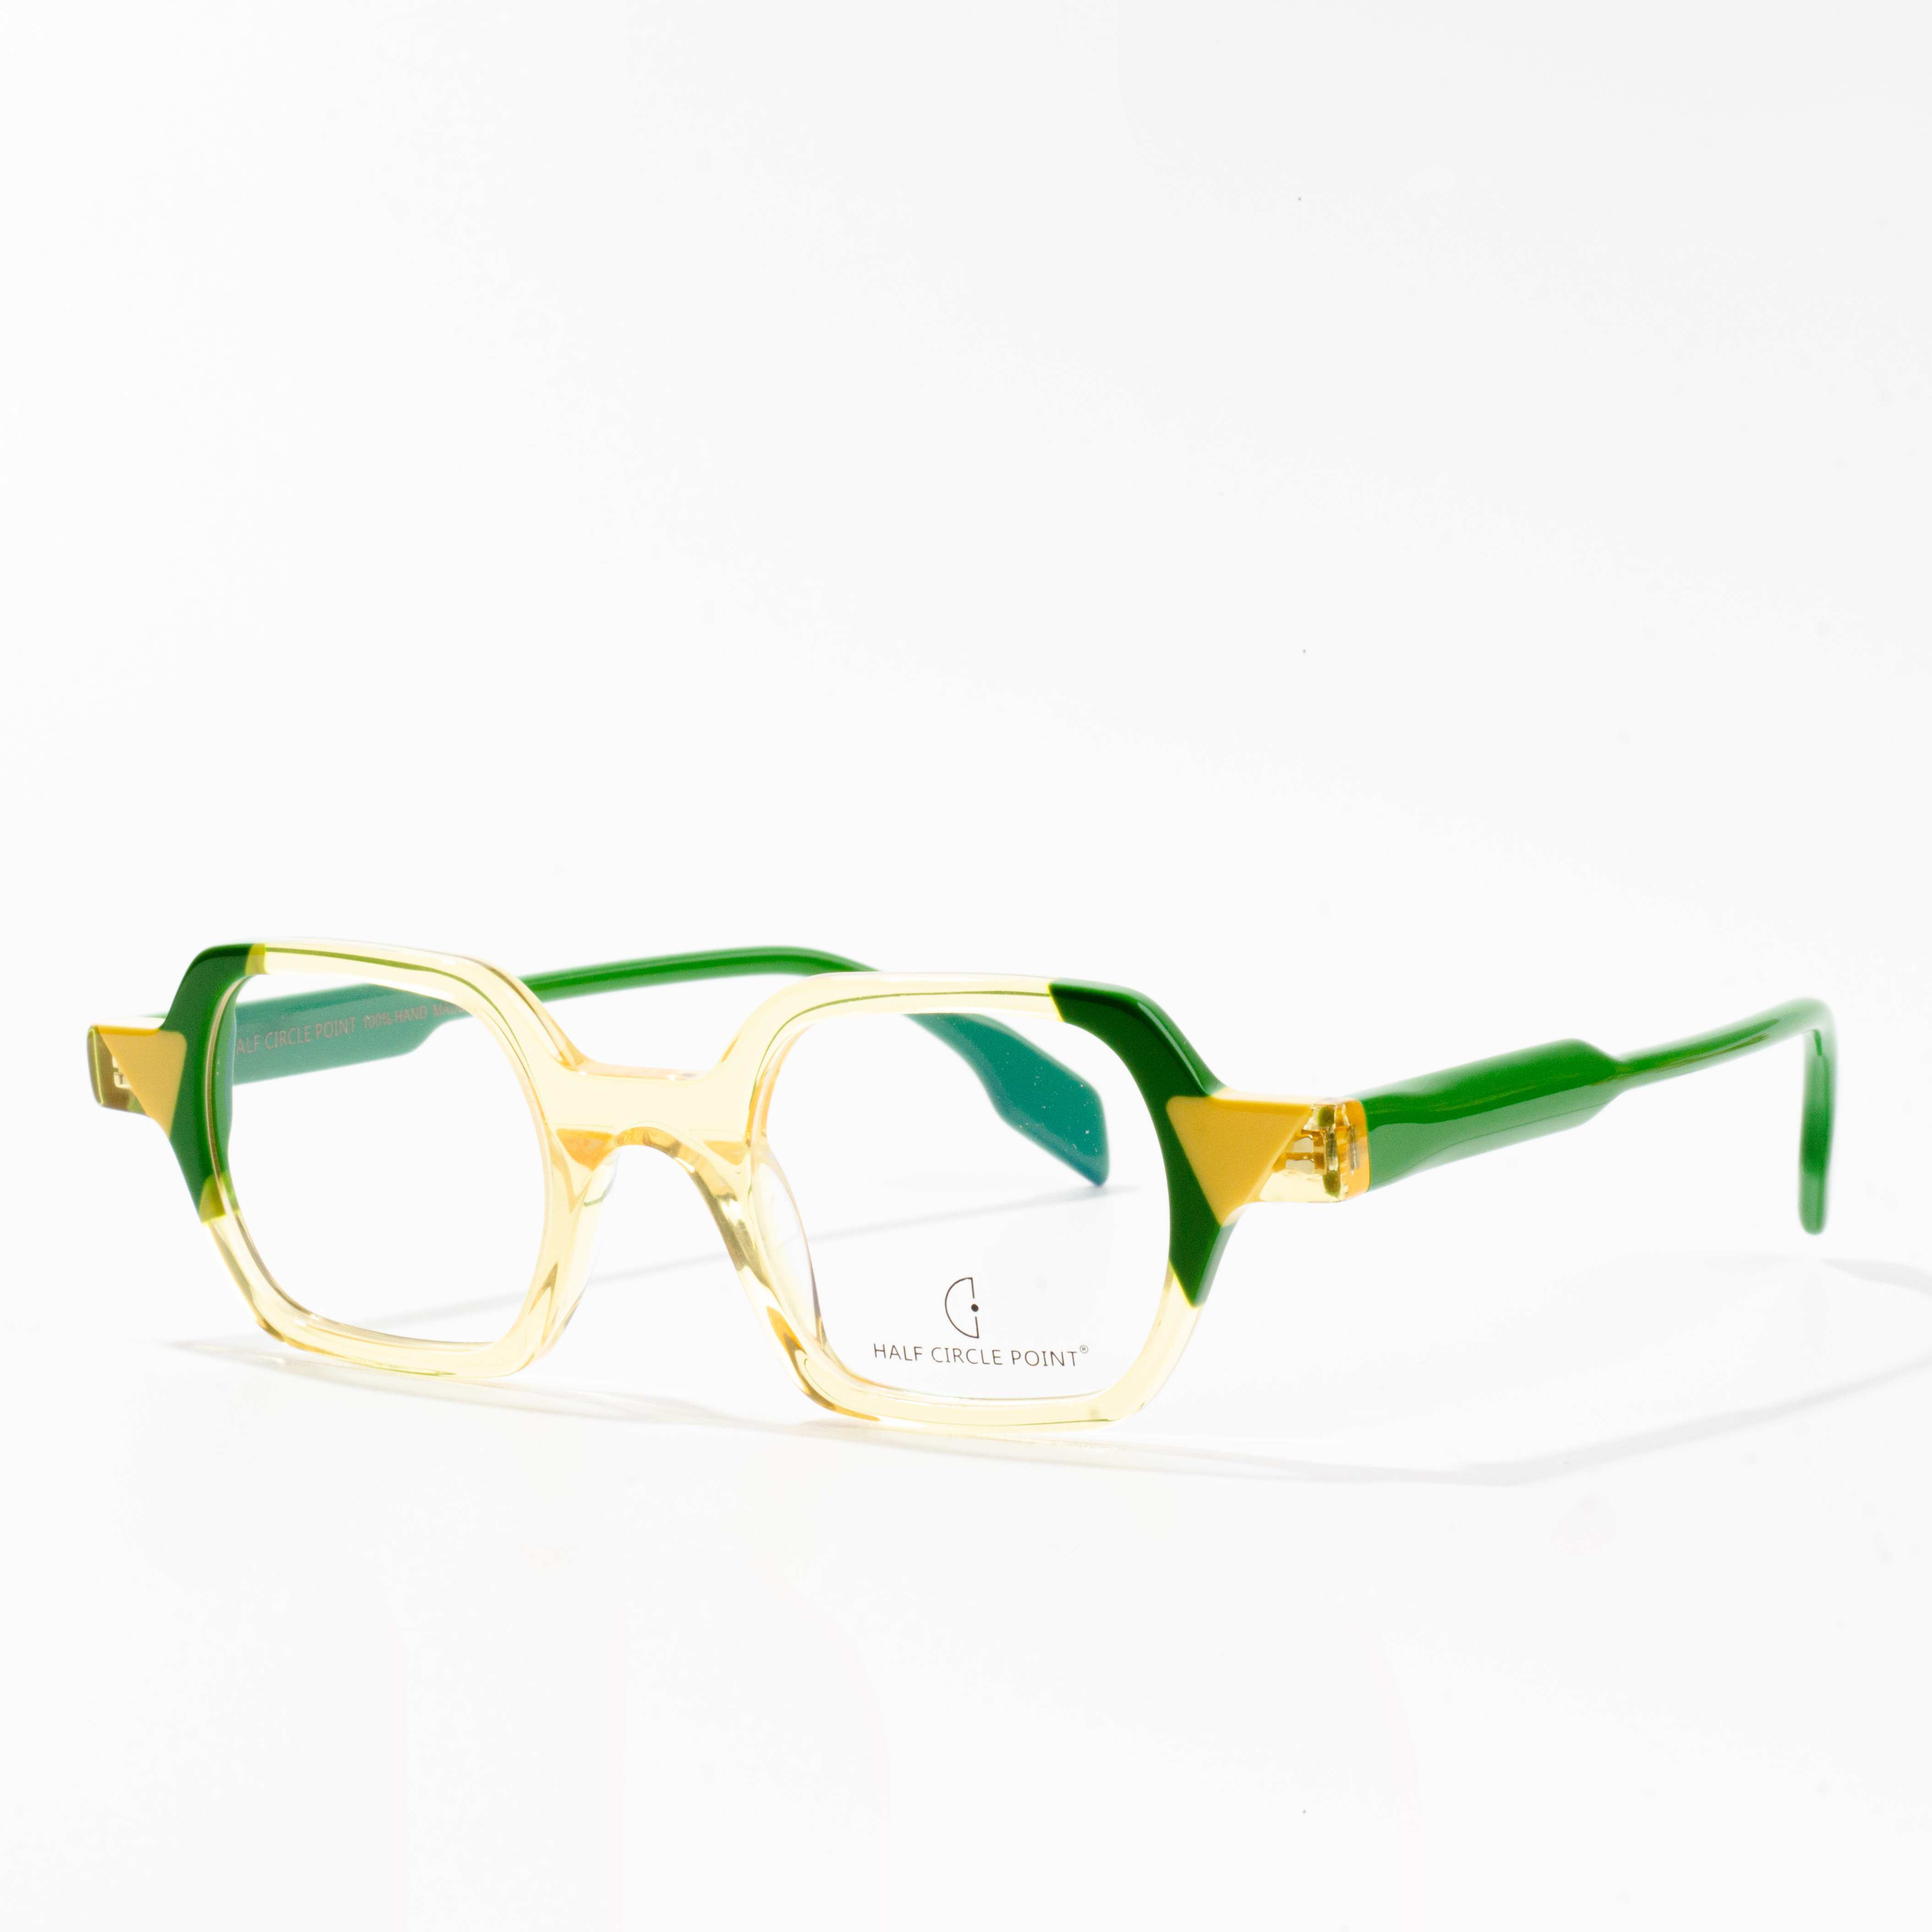 clear acetate glasses frames